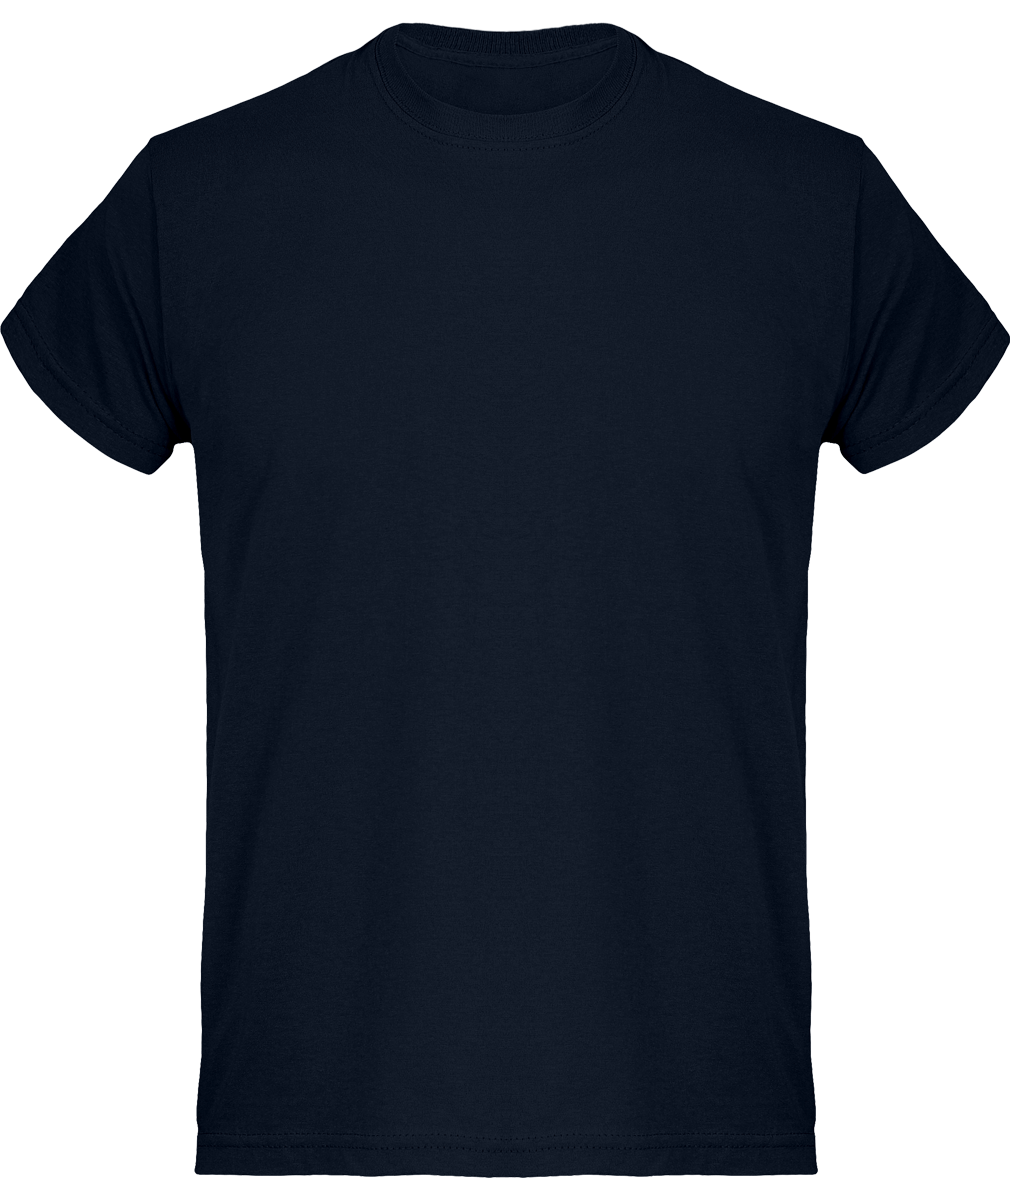 Basic Cotton T-Shirt For Men Ideal For Customization Deep Navy